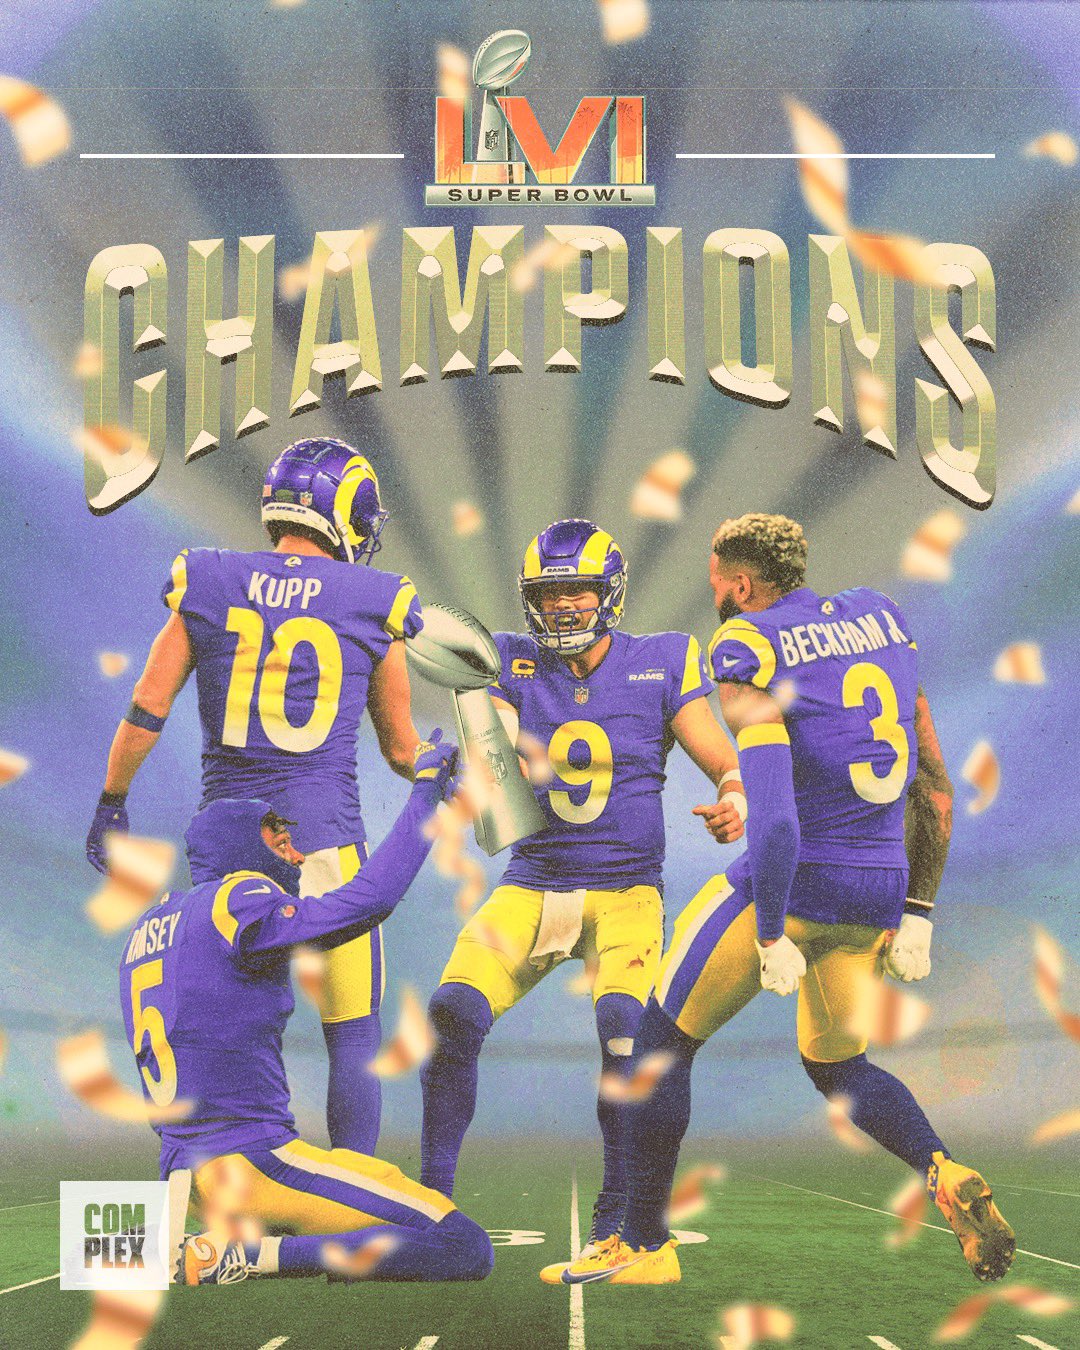 Los Angeles Rams Super Bowl Champions wallpaper